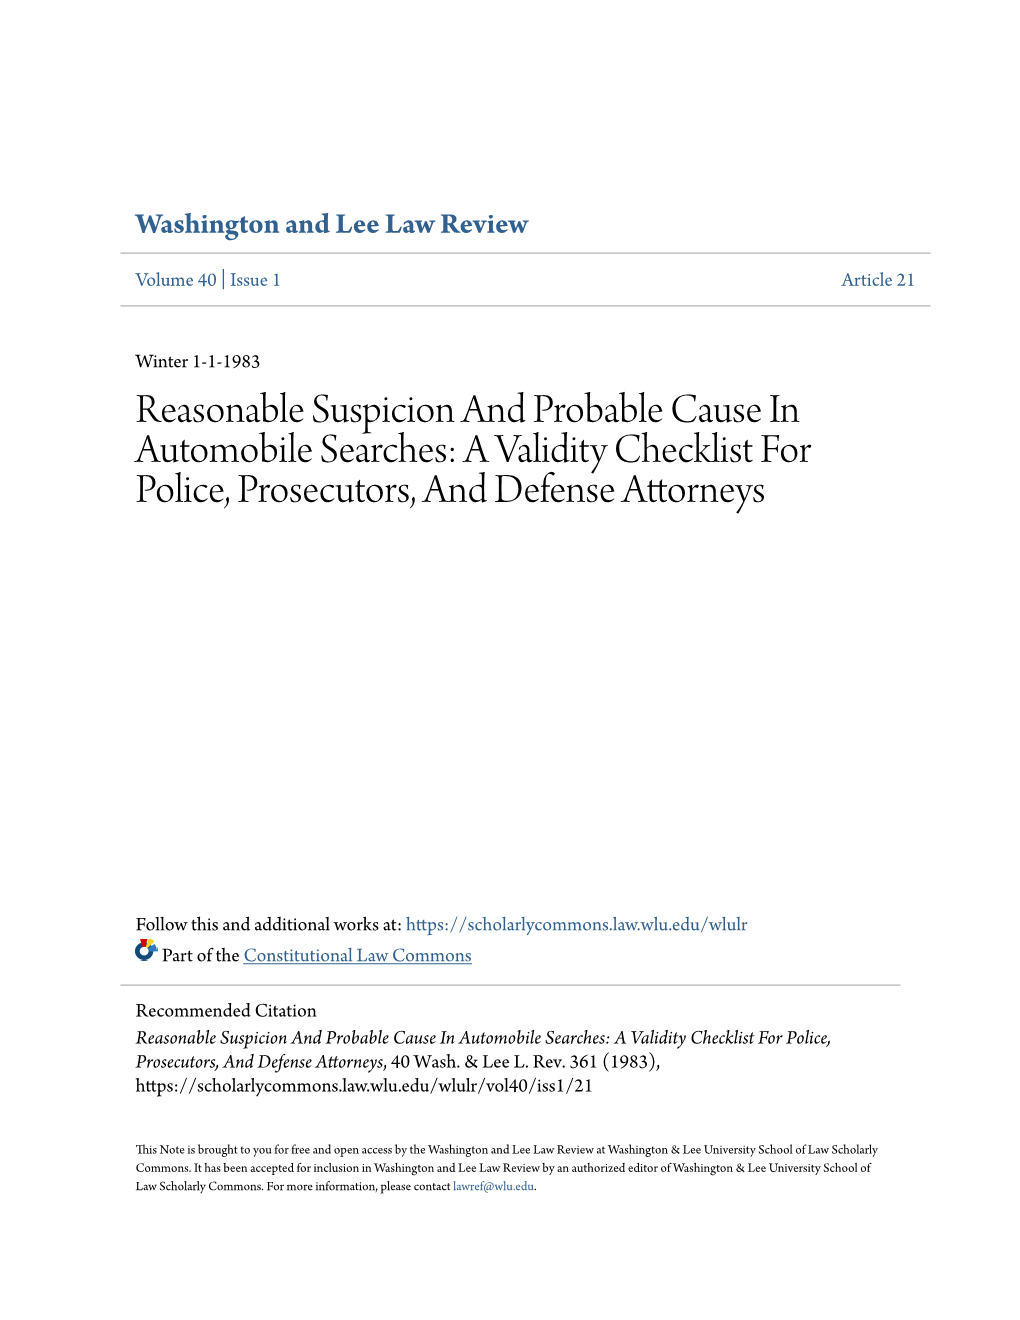 Reasonable Suspicion and Probable Cause in Automobile Searches: a Validity Checklist for Police, Prosecutors, and Defense Attorneys